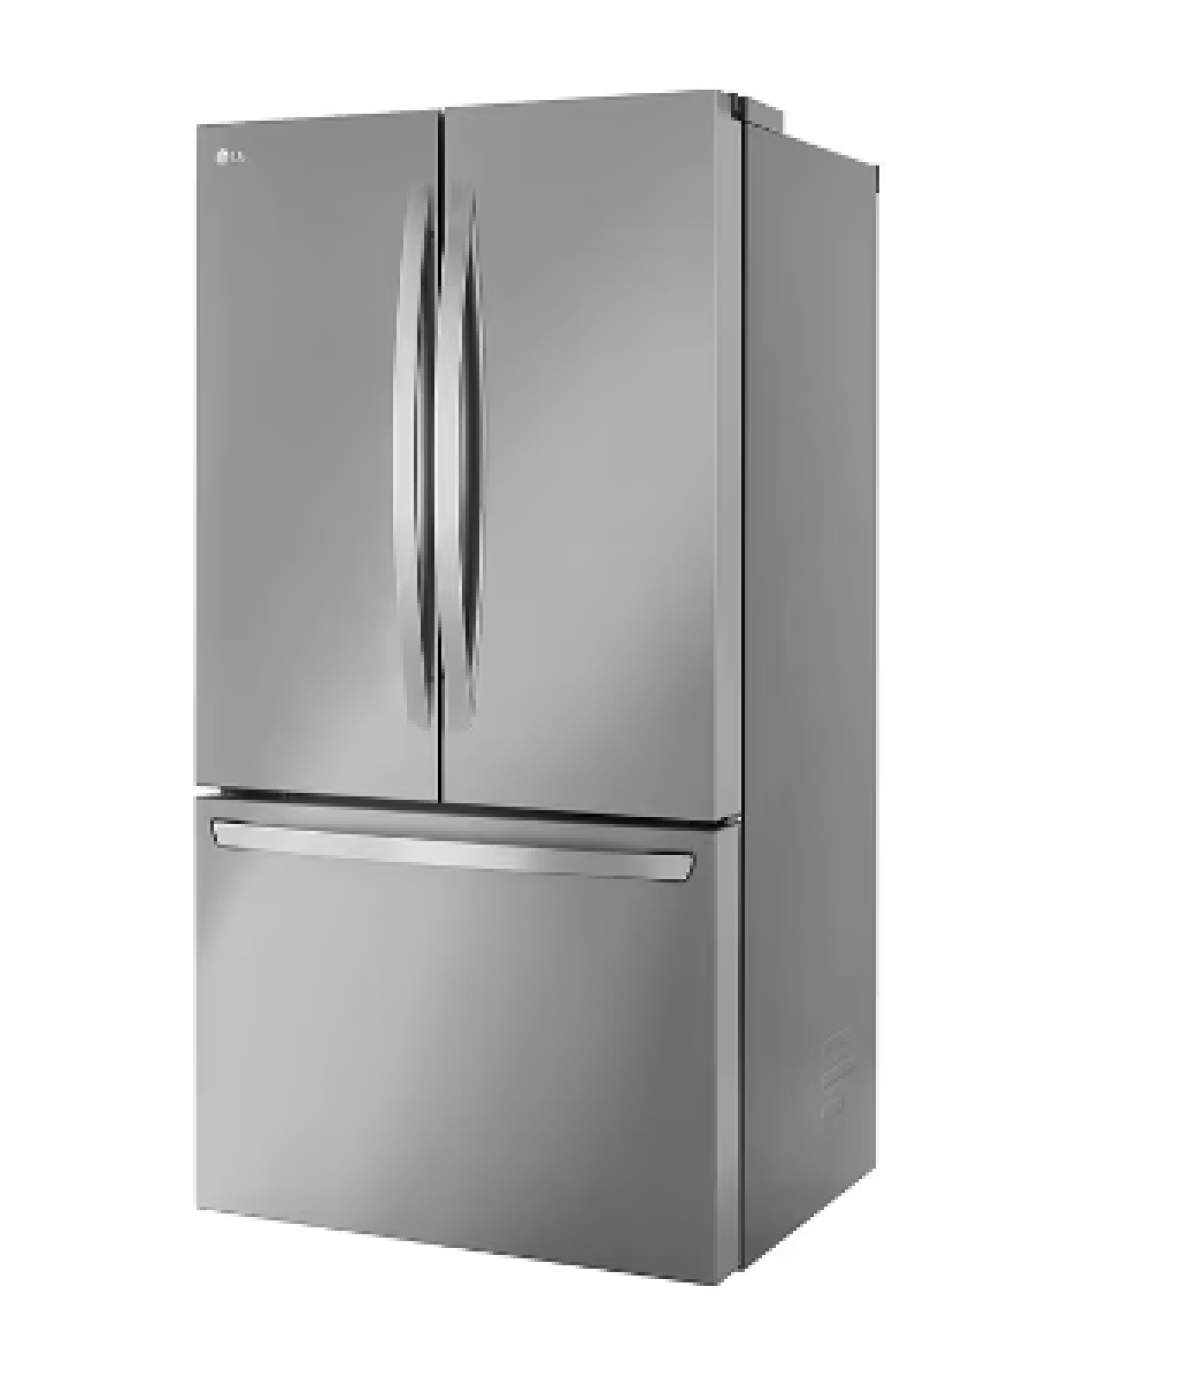 LG's BOGO savings deal on refrigerators doubles food storage